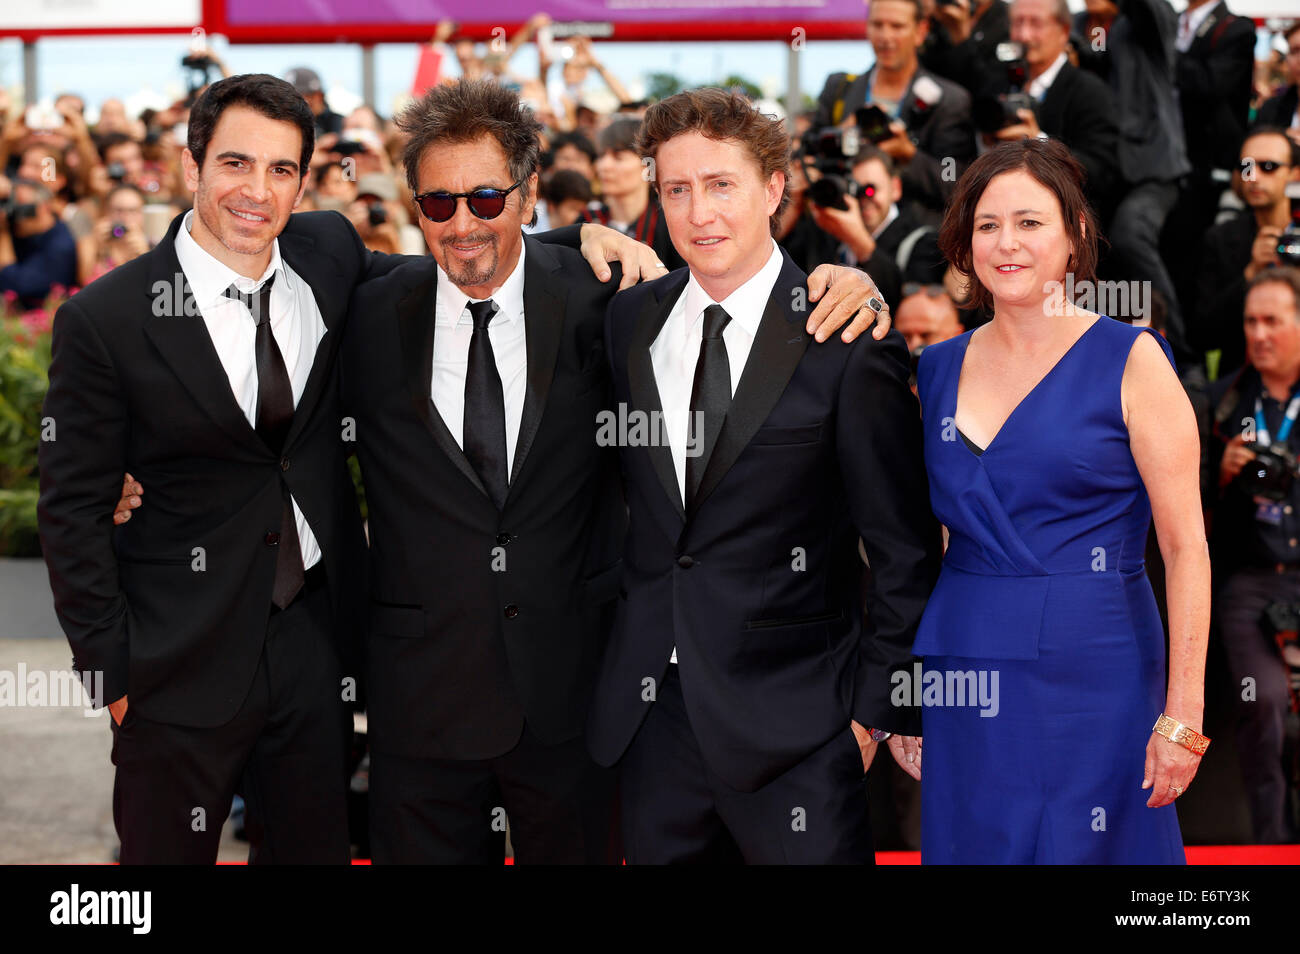 Chris Messina, David Gordon Green, Al Pacino, Lisa Muskat attending the 'Manglehorn' premiere at the 71nd Venice International Film Festival on August 30, 2014. Stock Photo